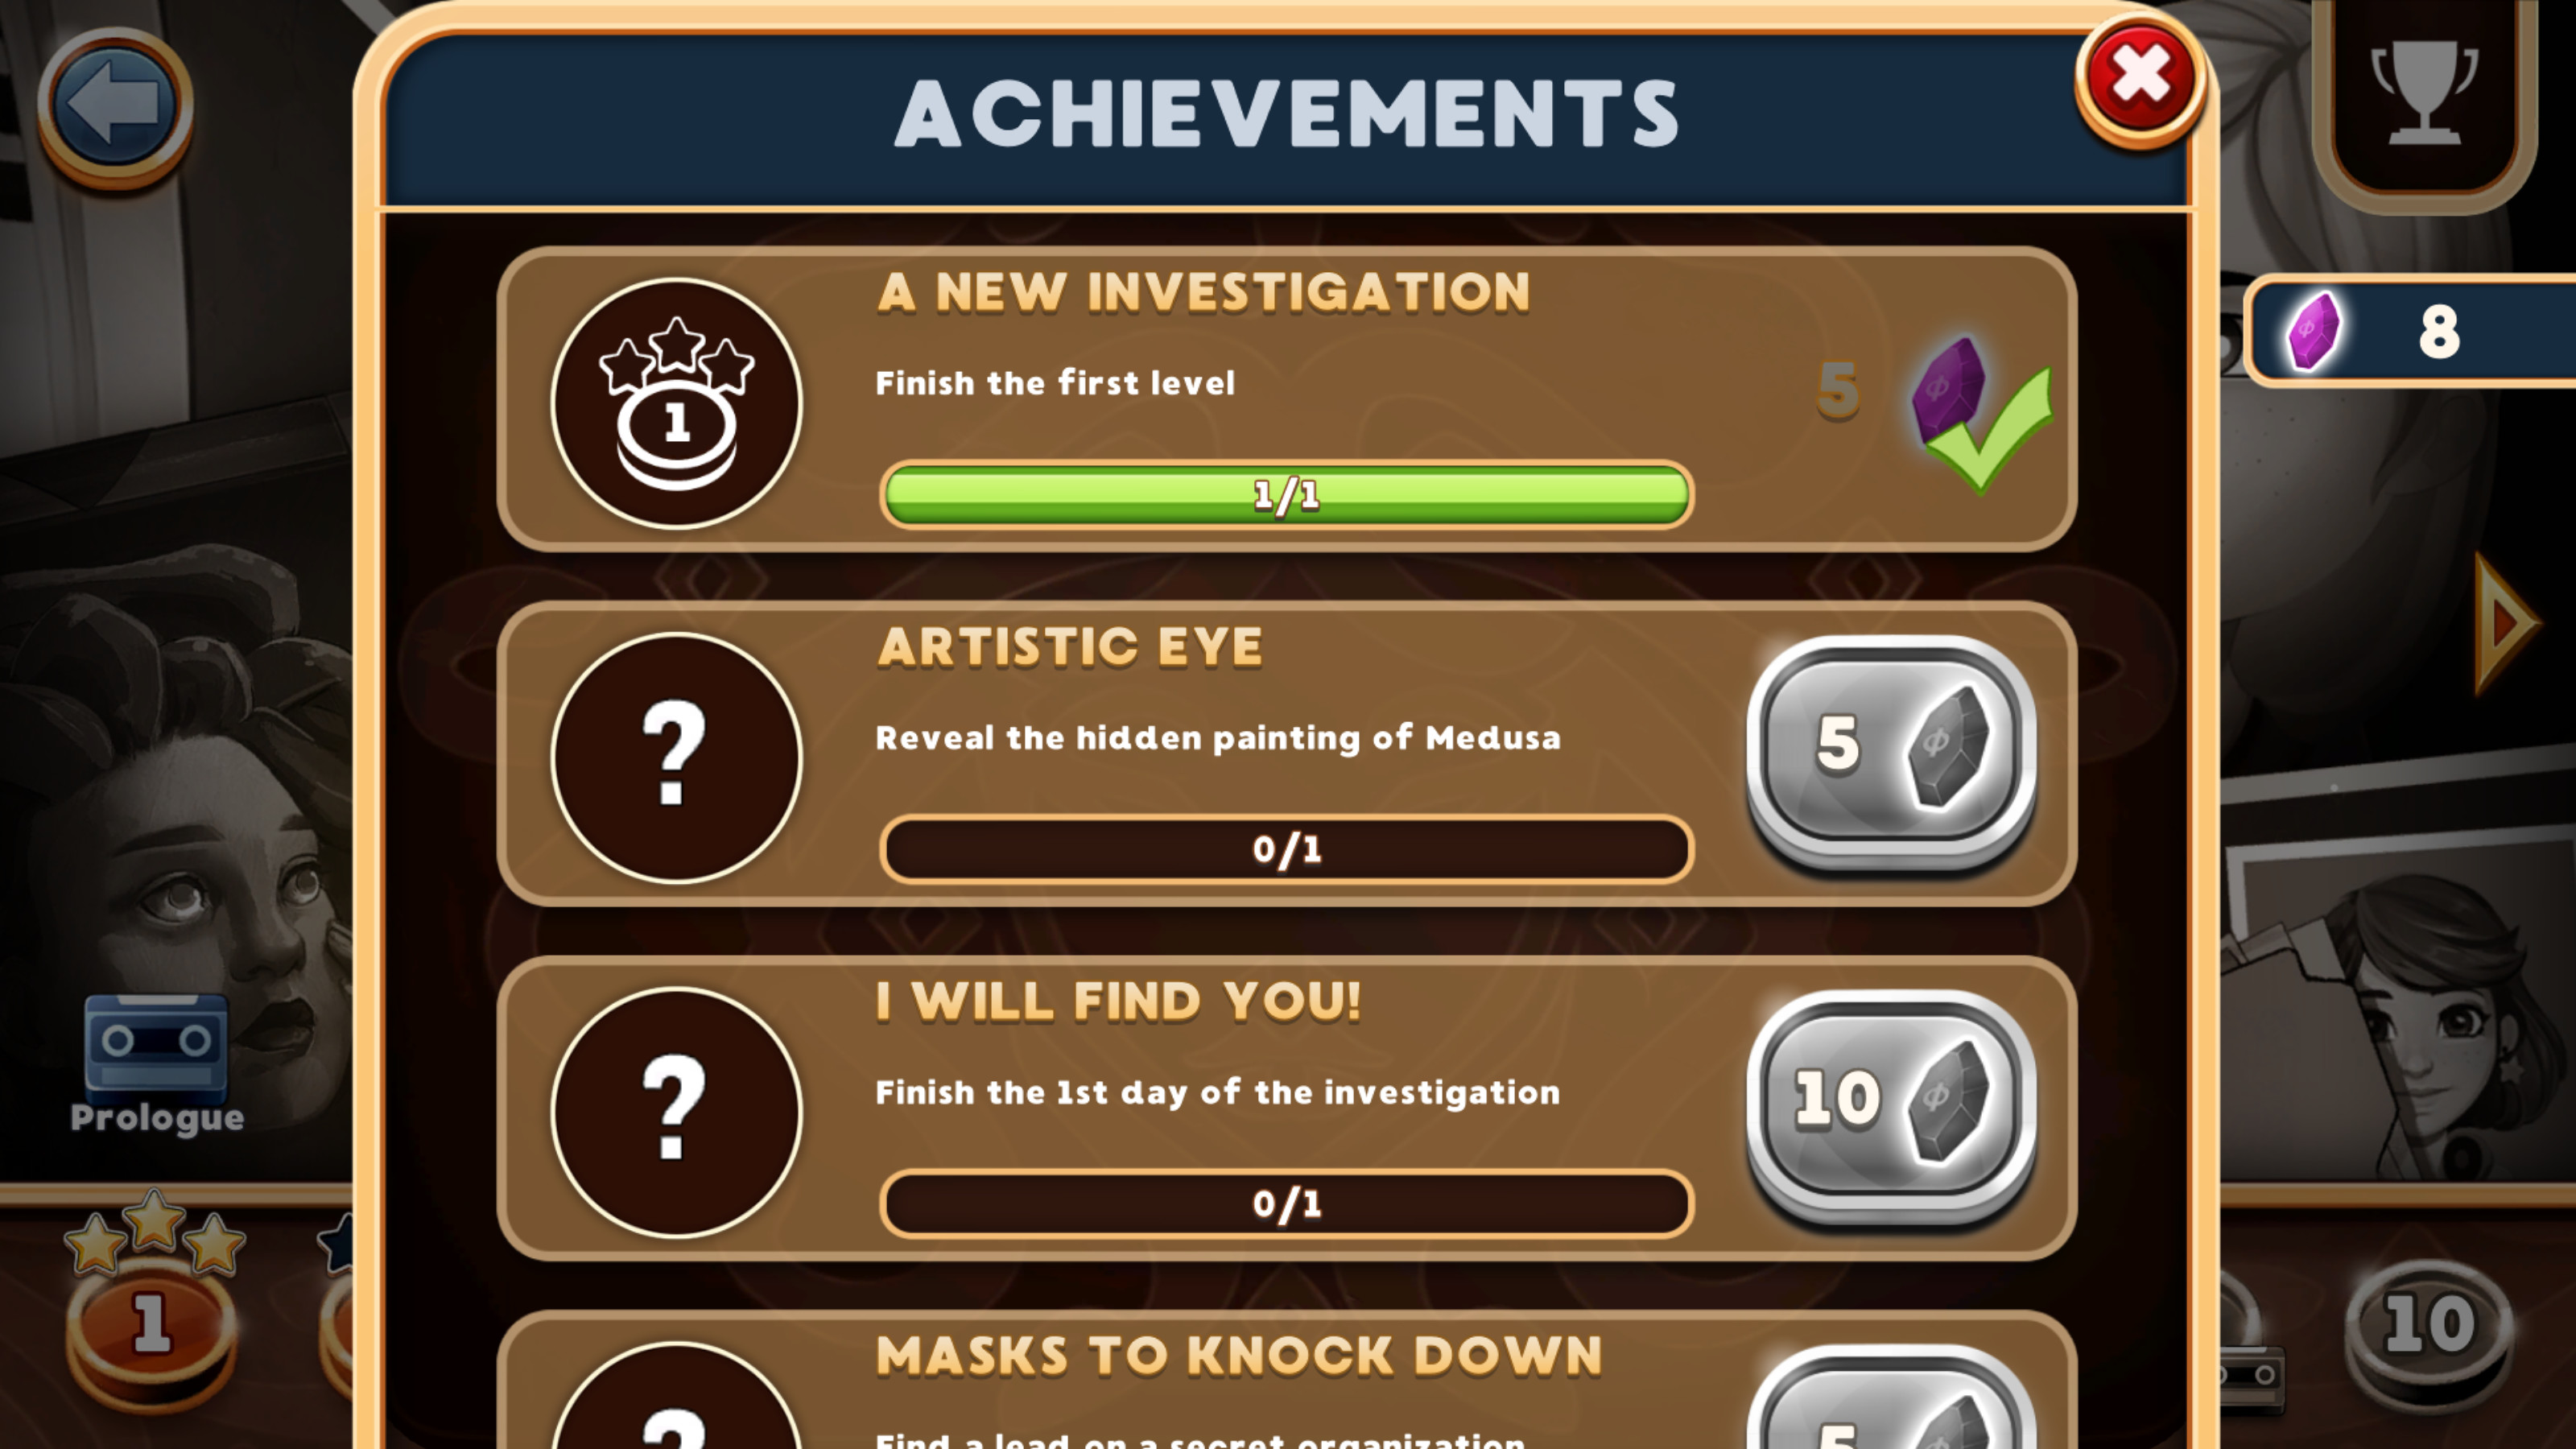 Detective Jackie - Mystic Case screenshot